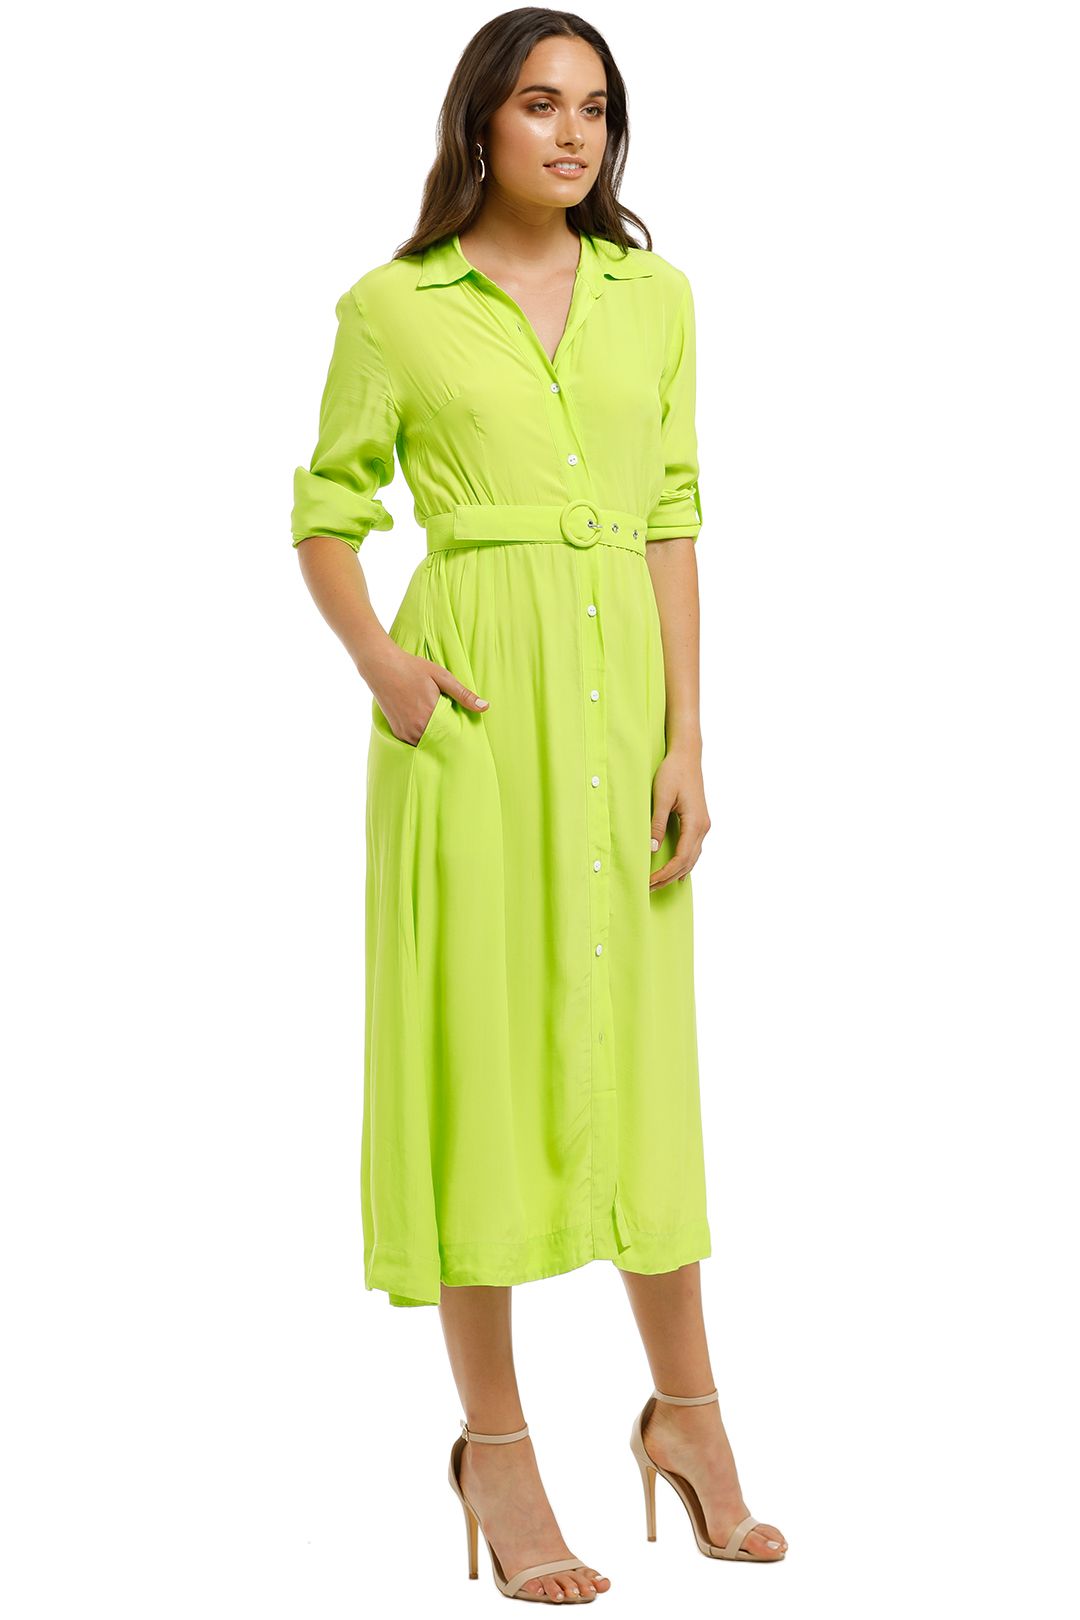 SWF-Lime-LS-Shirt-Dress-Green-Side